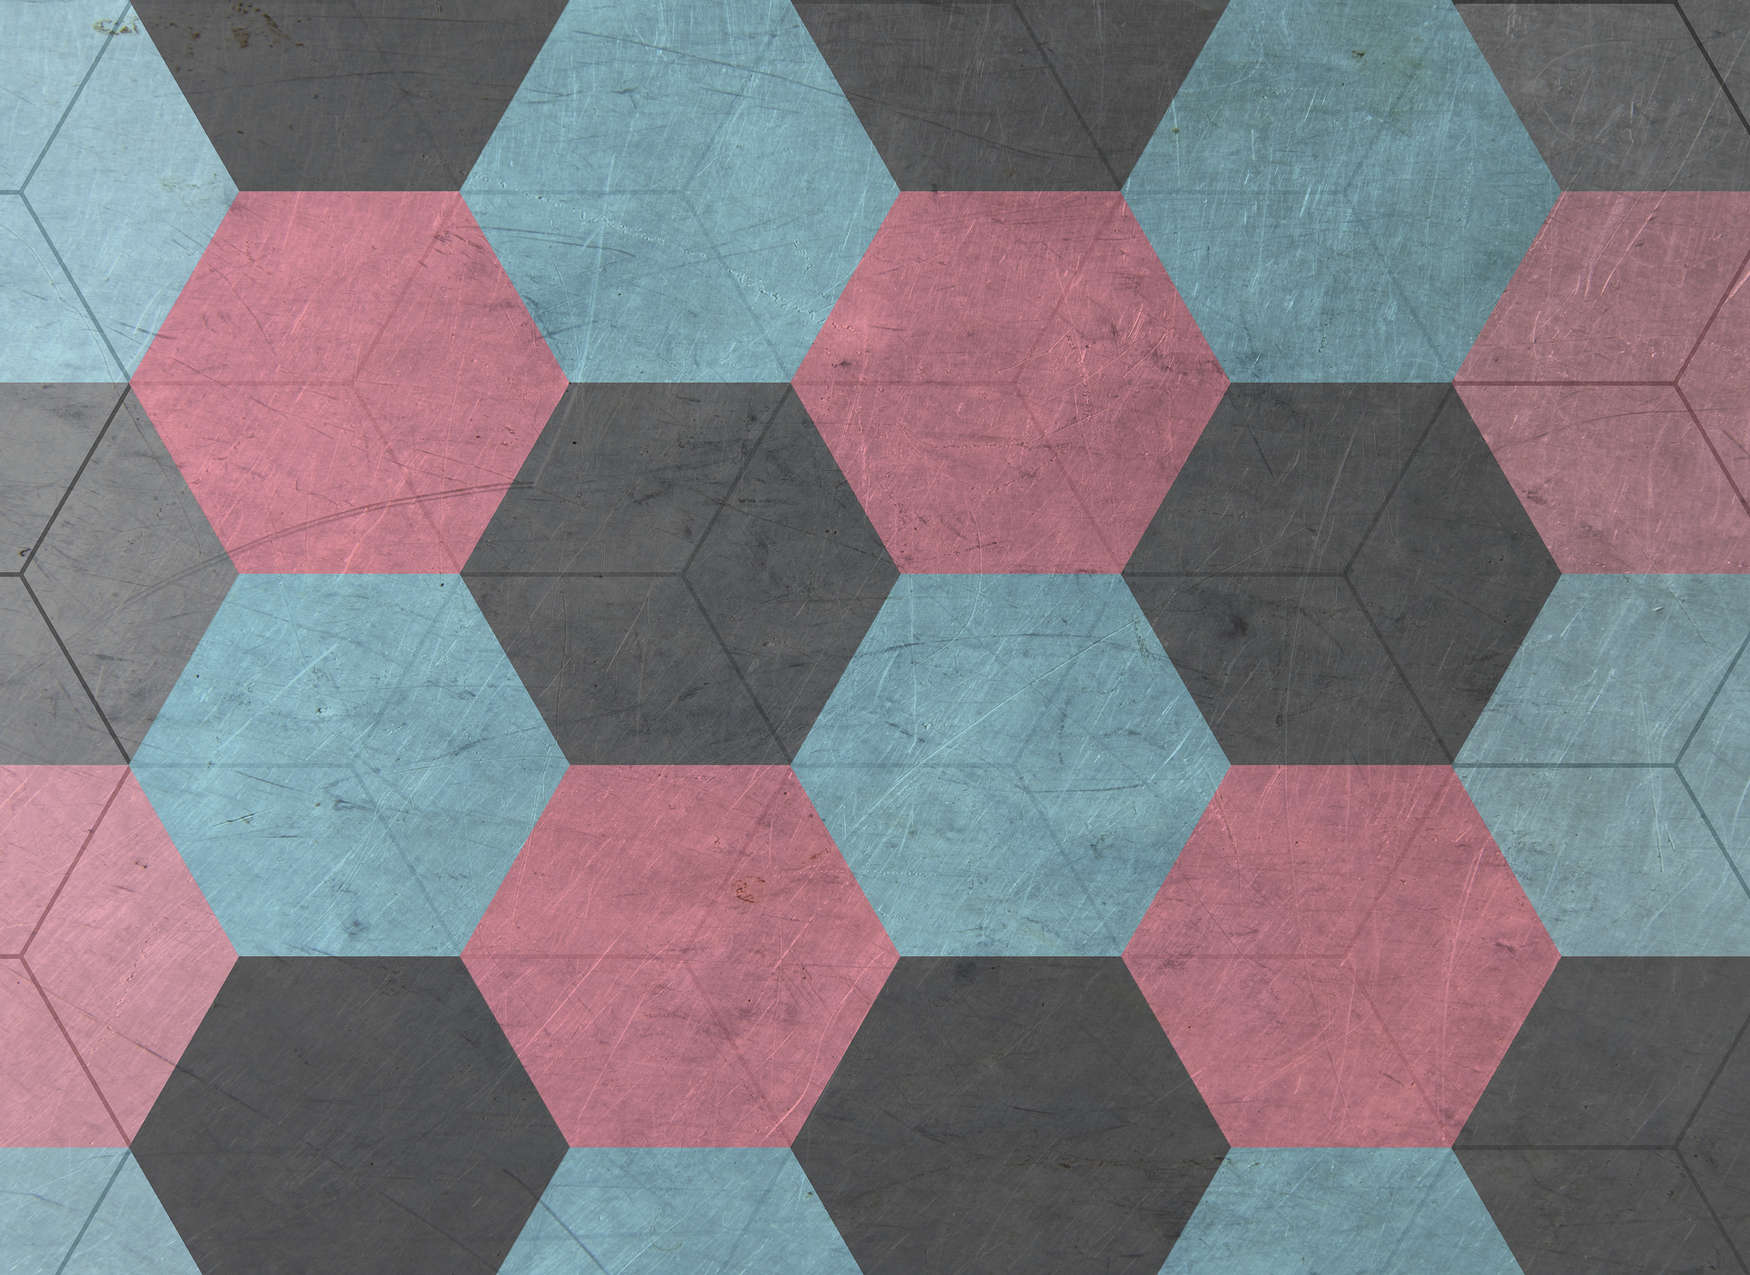             Vintage Look Hexagon Tiles Wallpaper - Blue, Red, Black
        